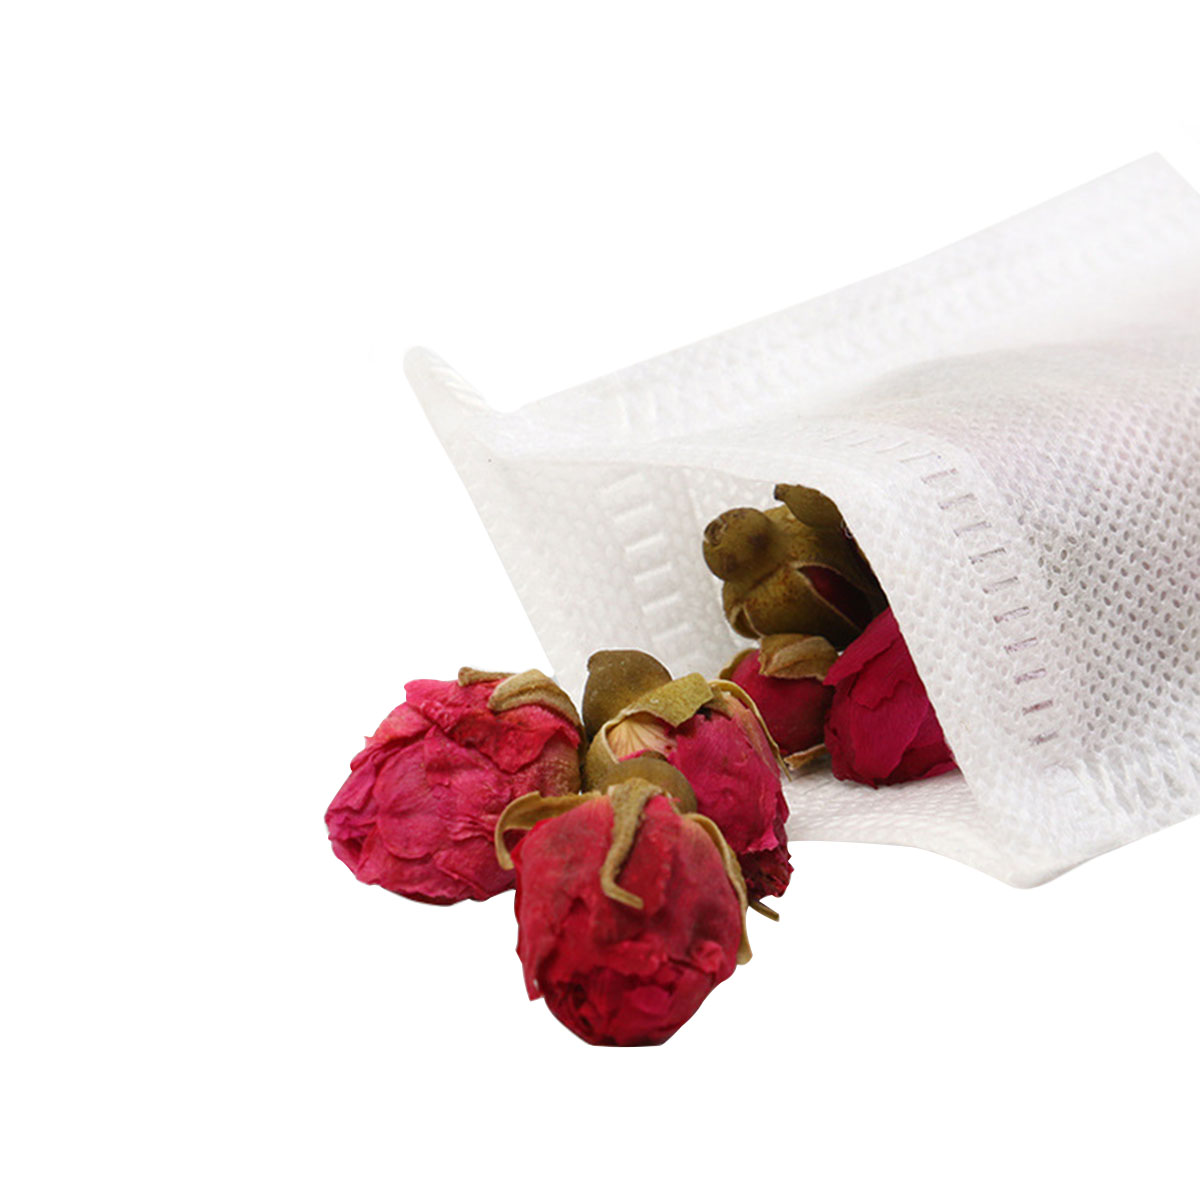 100Pcs Tea Filter Bags Disposable Household Tea Bag Filter Bag for Tea Chinese Herb